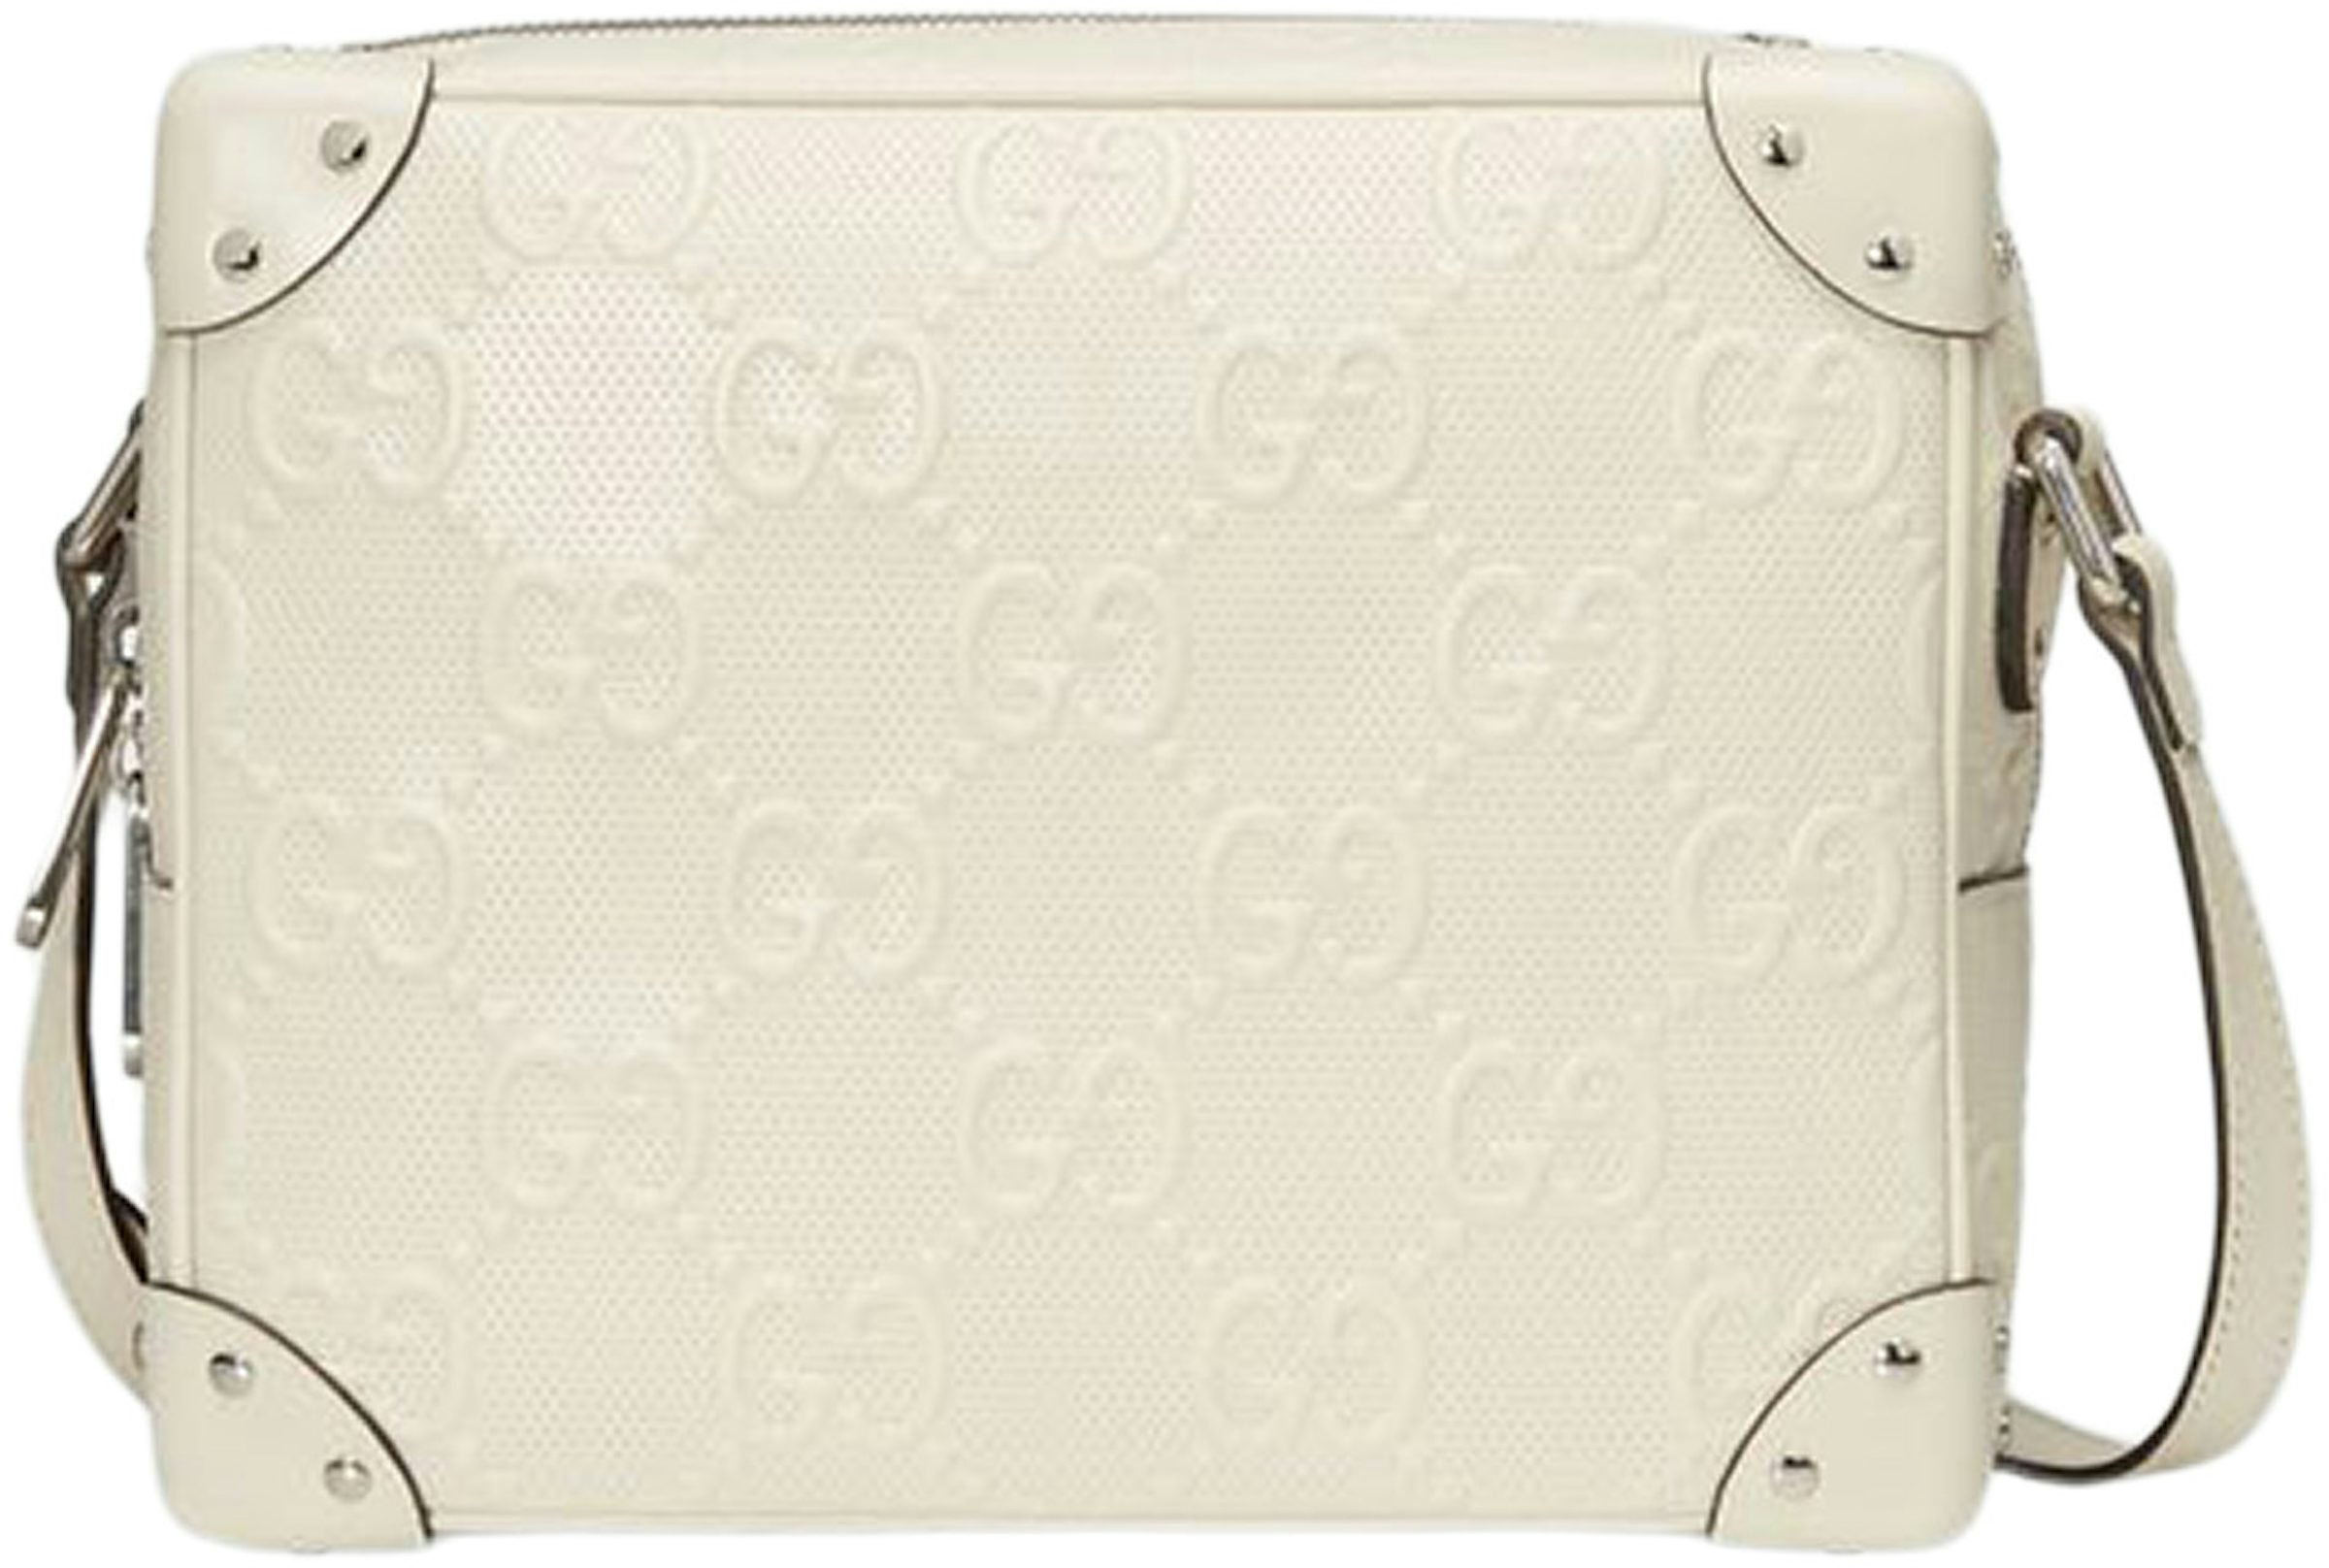 Gucci iPad 5 Case UK  White